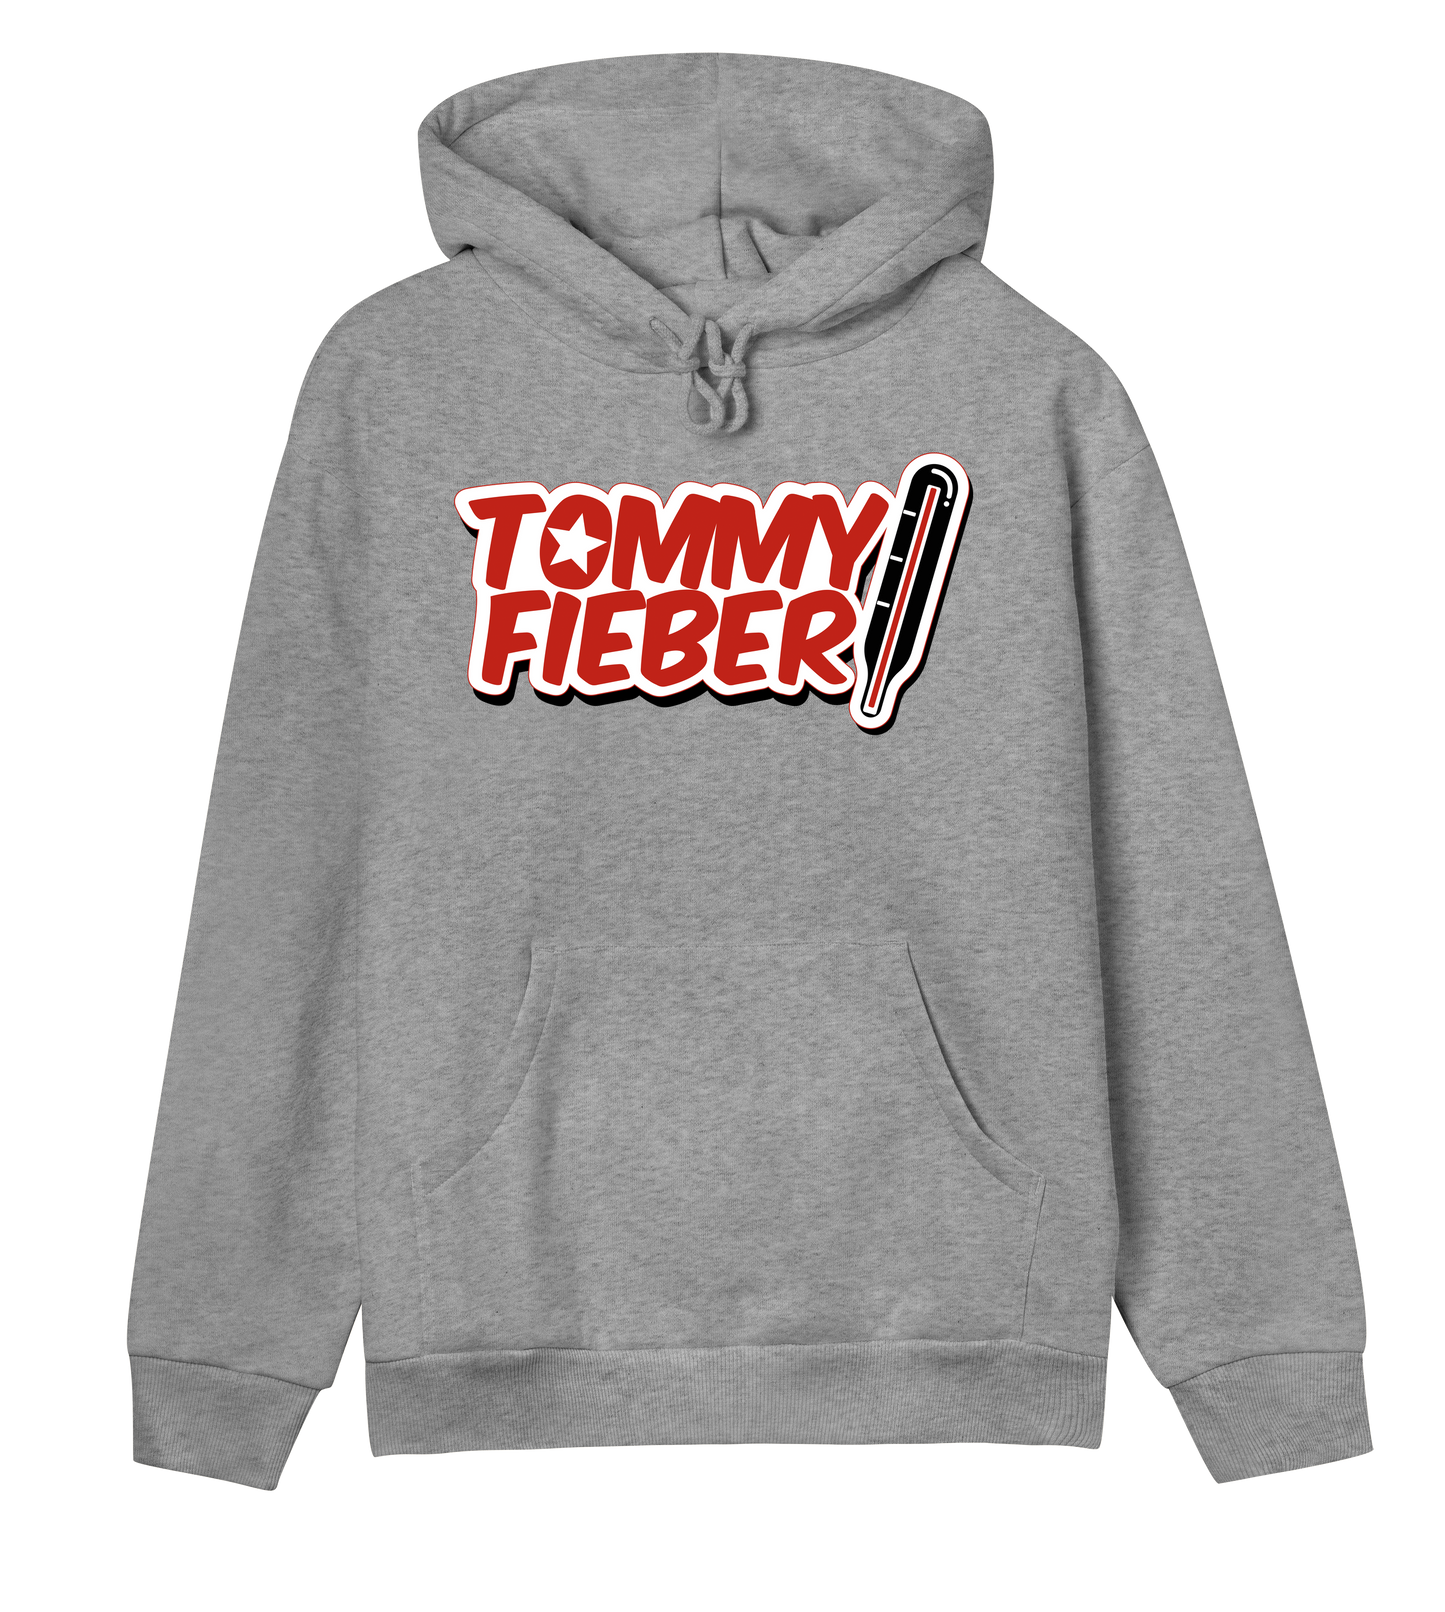 Tommy Fieber - Womens Regular Hoodie